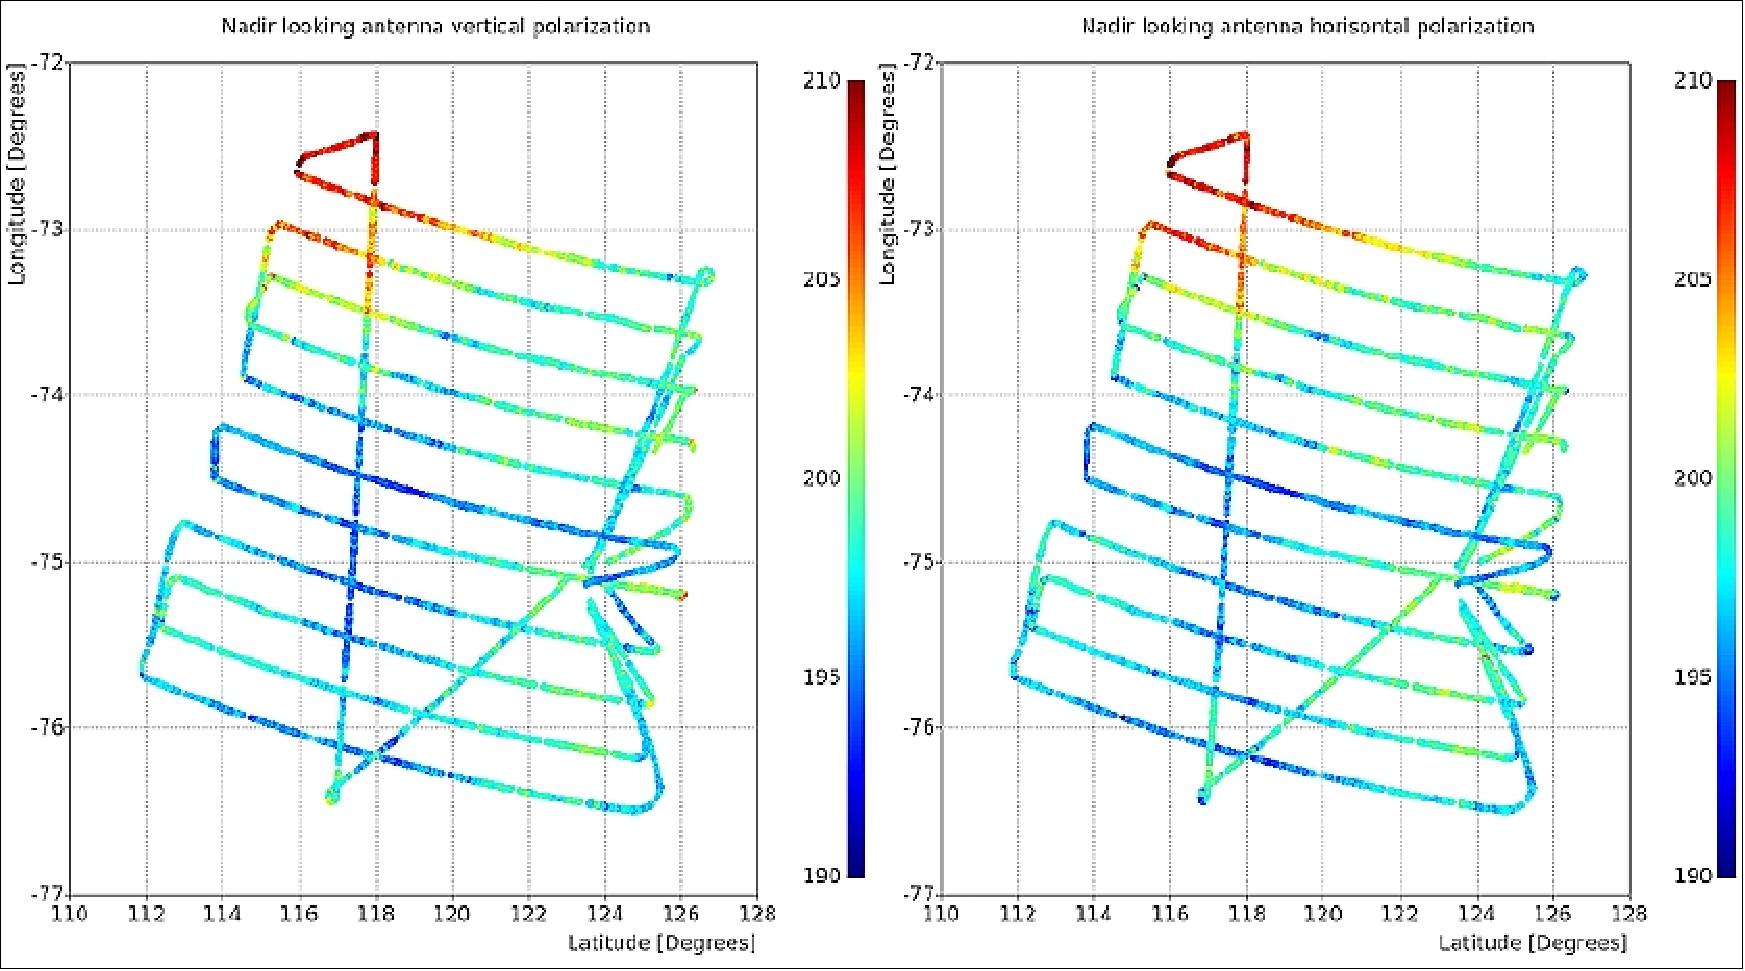 Figure 93: DOMECair nadir brightness temperatures: Left panel vertical polarization measurements, right panel horizontal polarization measurements; scale in Kelvin (image credit: DTU, Ref. 83)